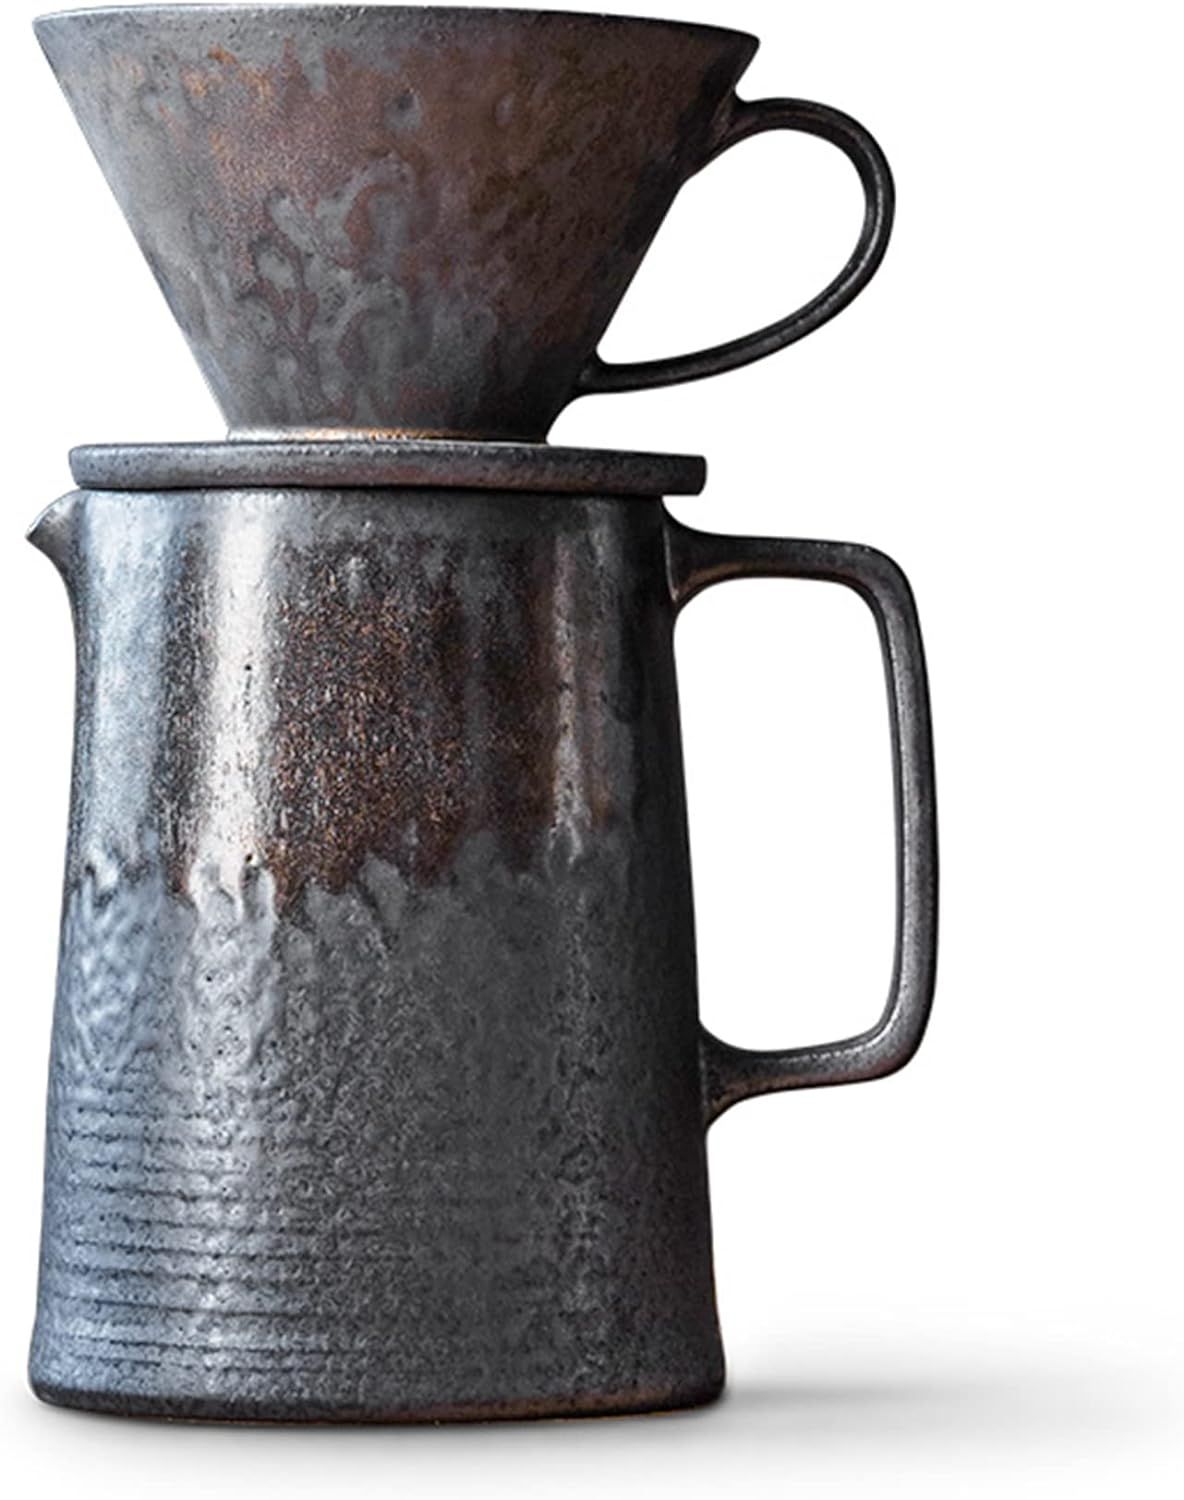 DehuaYao Pour Over Coffee Maker Set, Ceramic Coffee Dripper & Decanter, V-Shape Coffee Dripper wi... | Amazon (US)